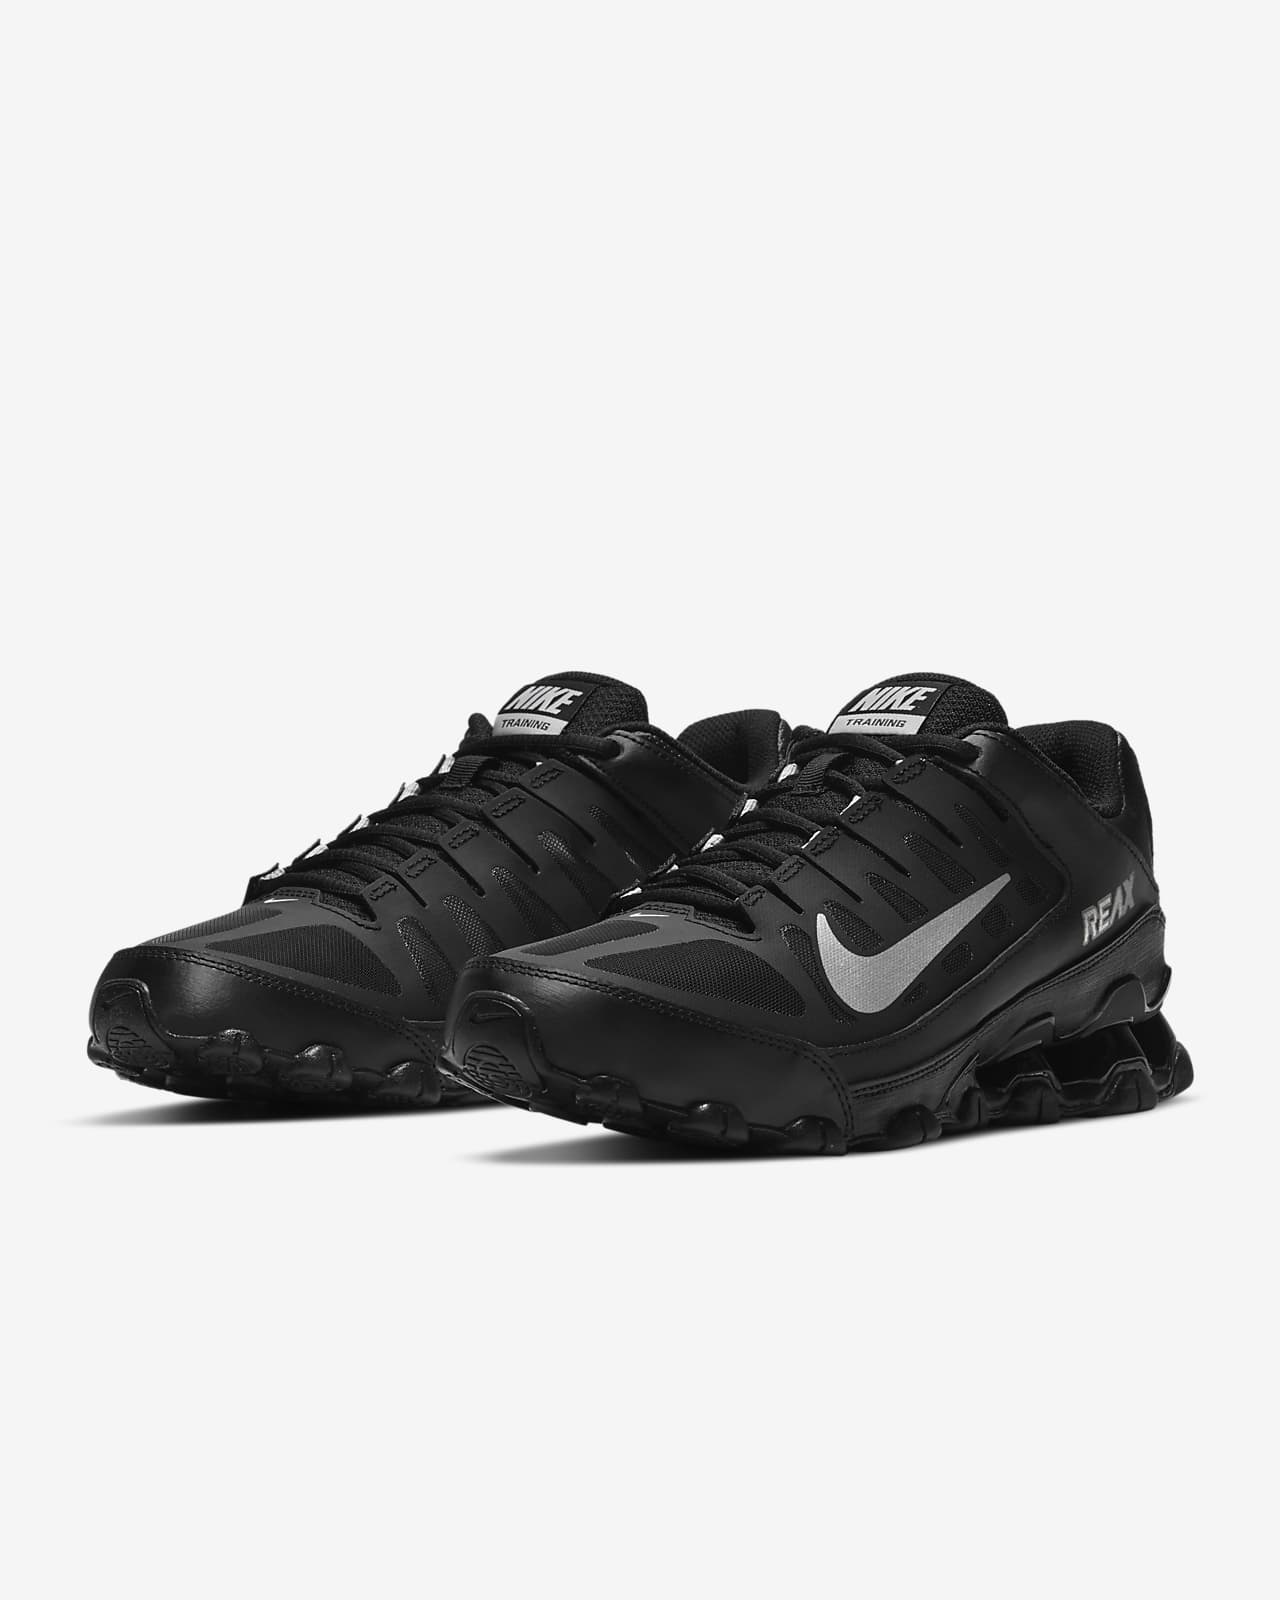 Nike Reax 8 TR Men's Training Shoe 